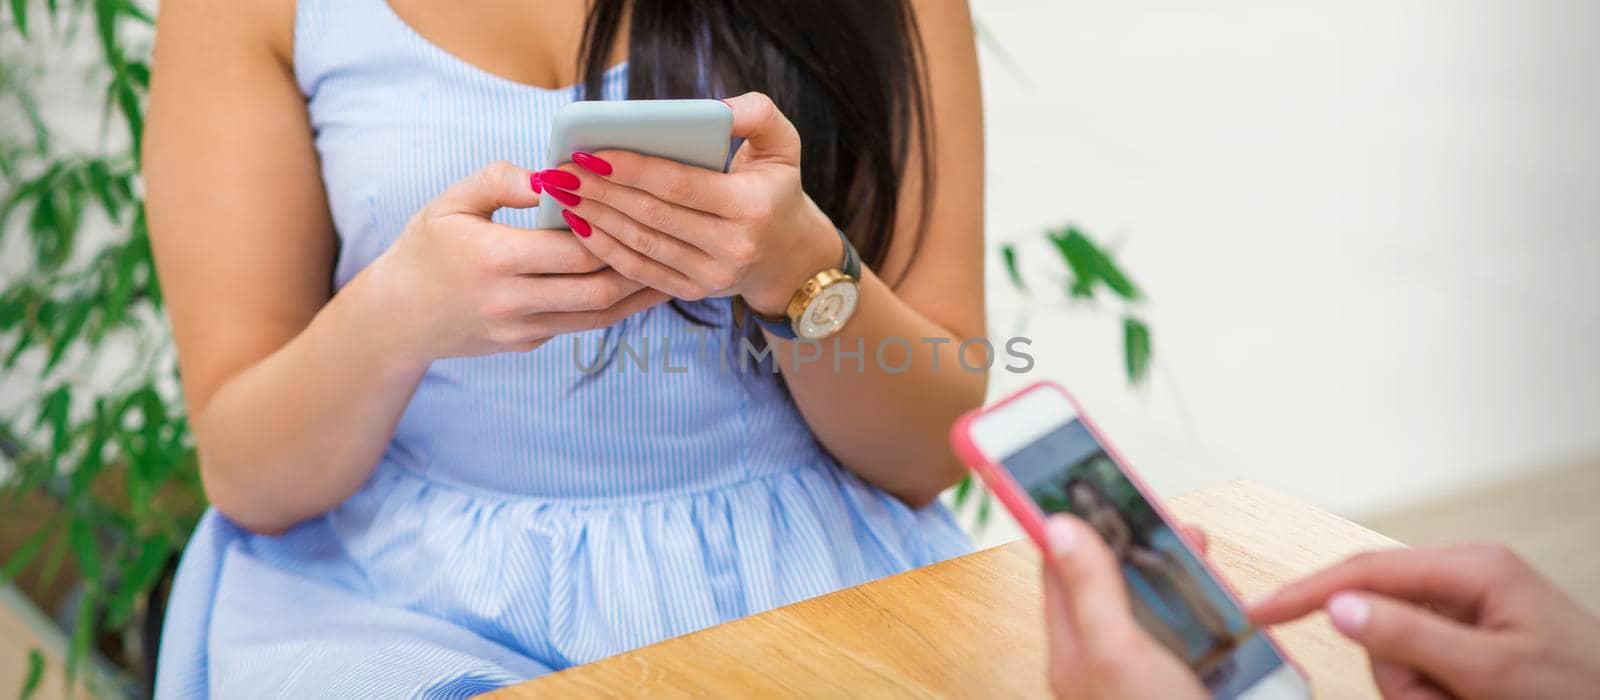 Young woman uses a smartphone by okskukuruza